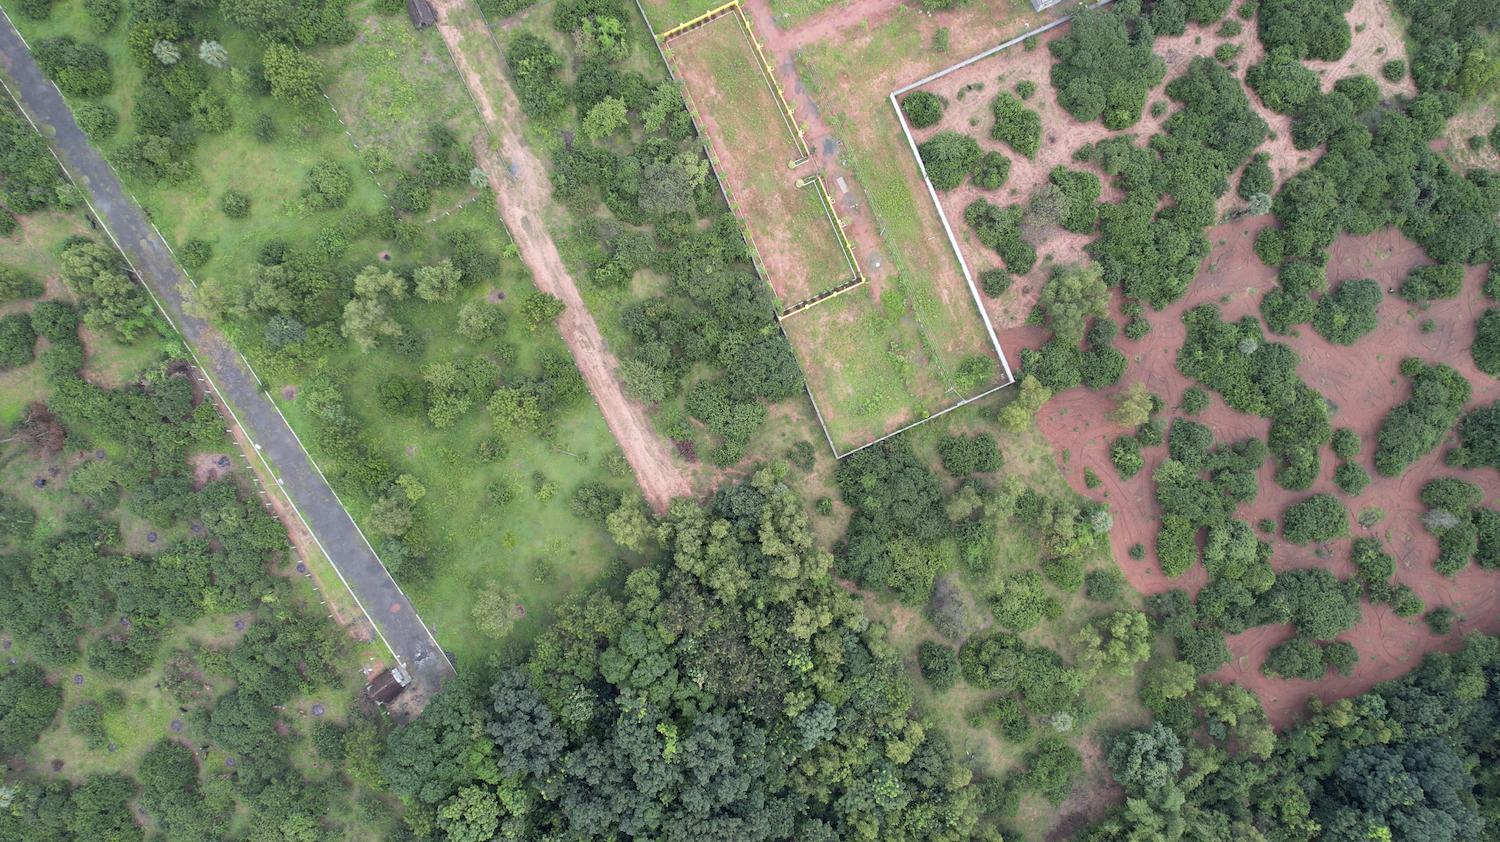 02 drone view farm side - Farm Land Plots besides PEC in Mathur - Auroville Road